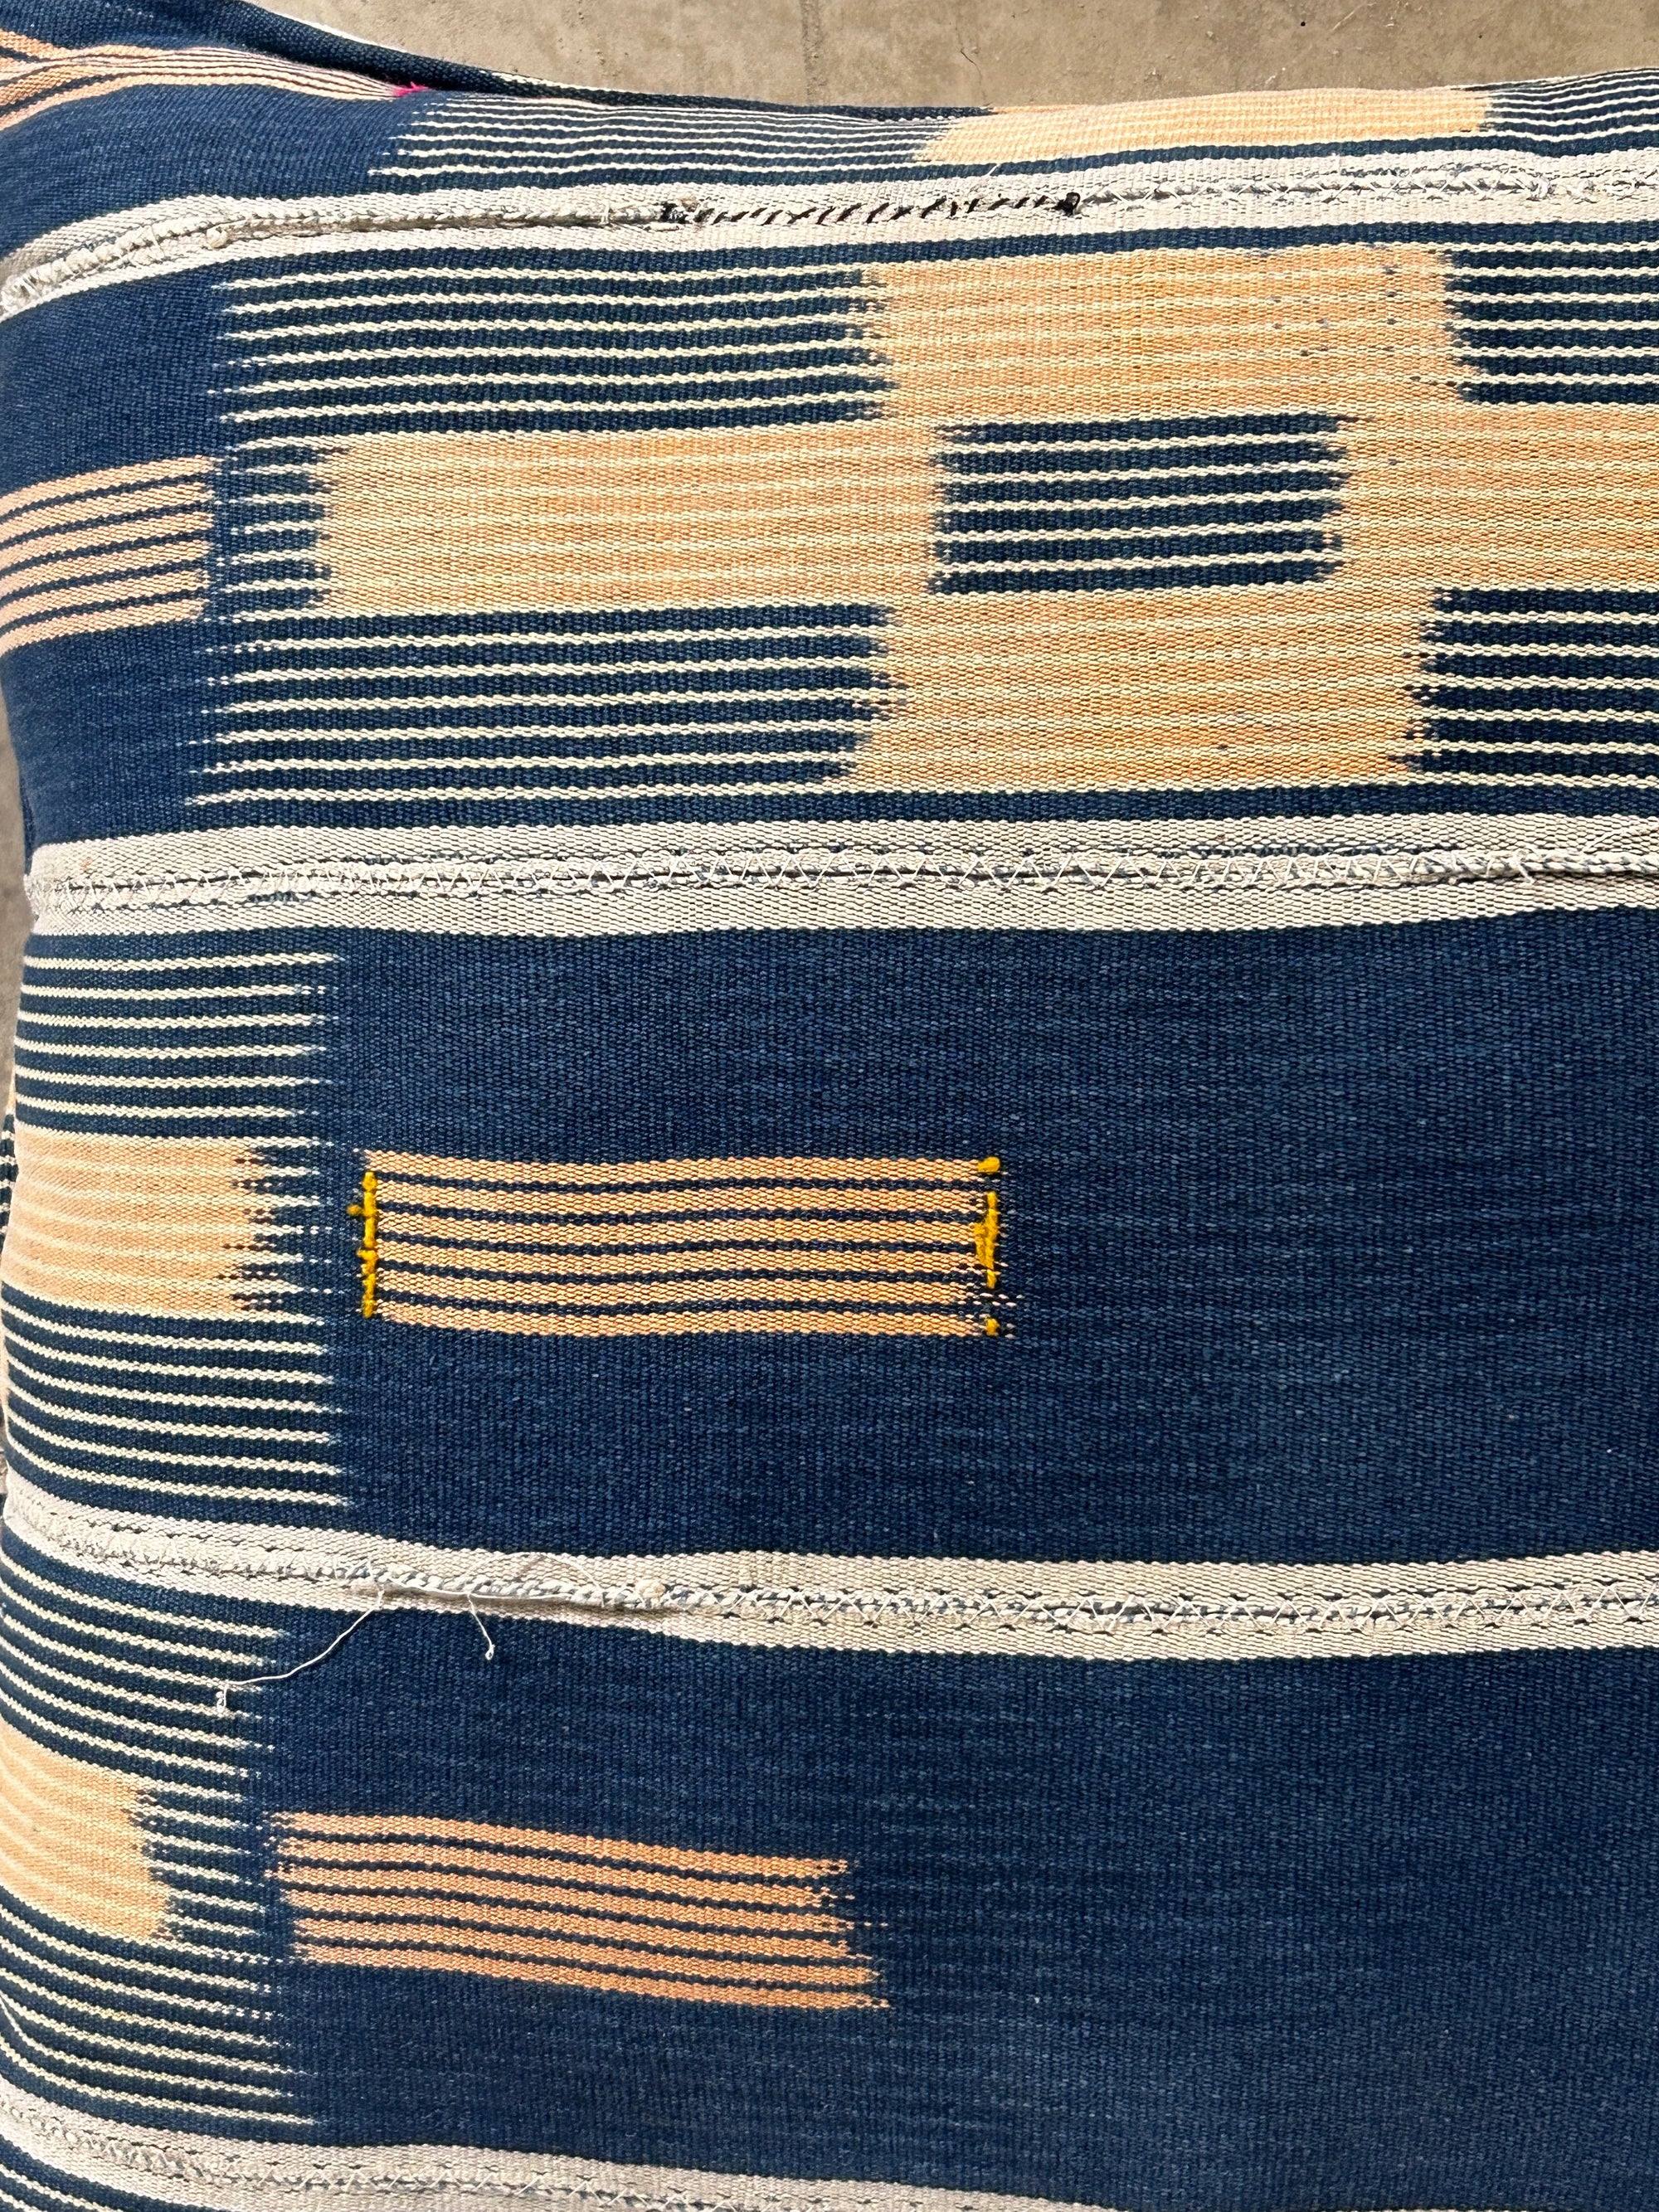 Baule Cloth Cushion (83.4.B69)